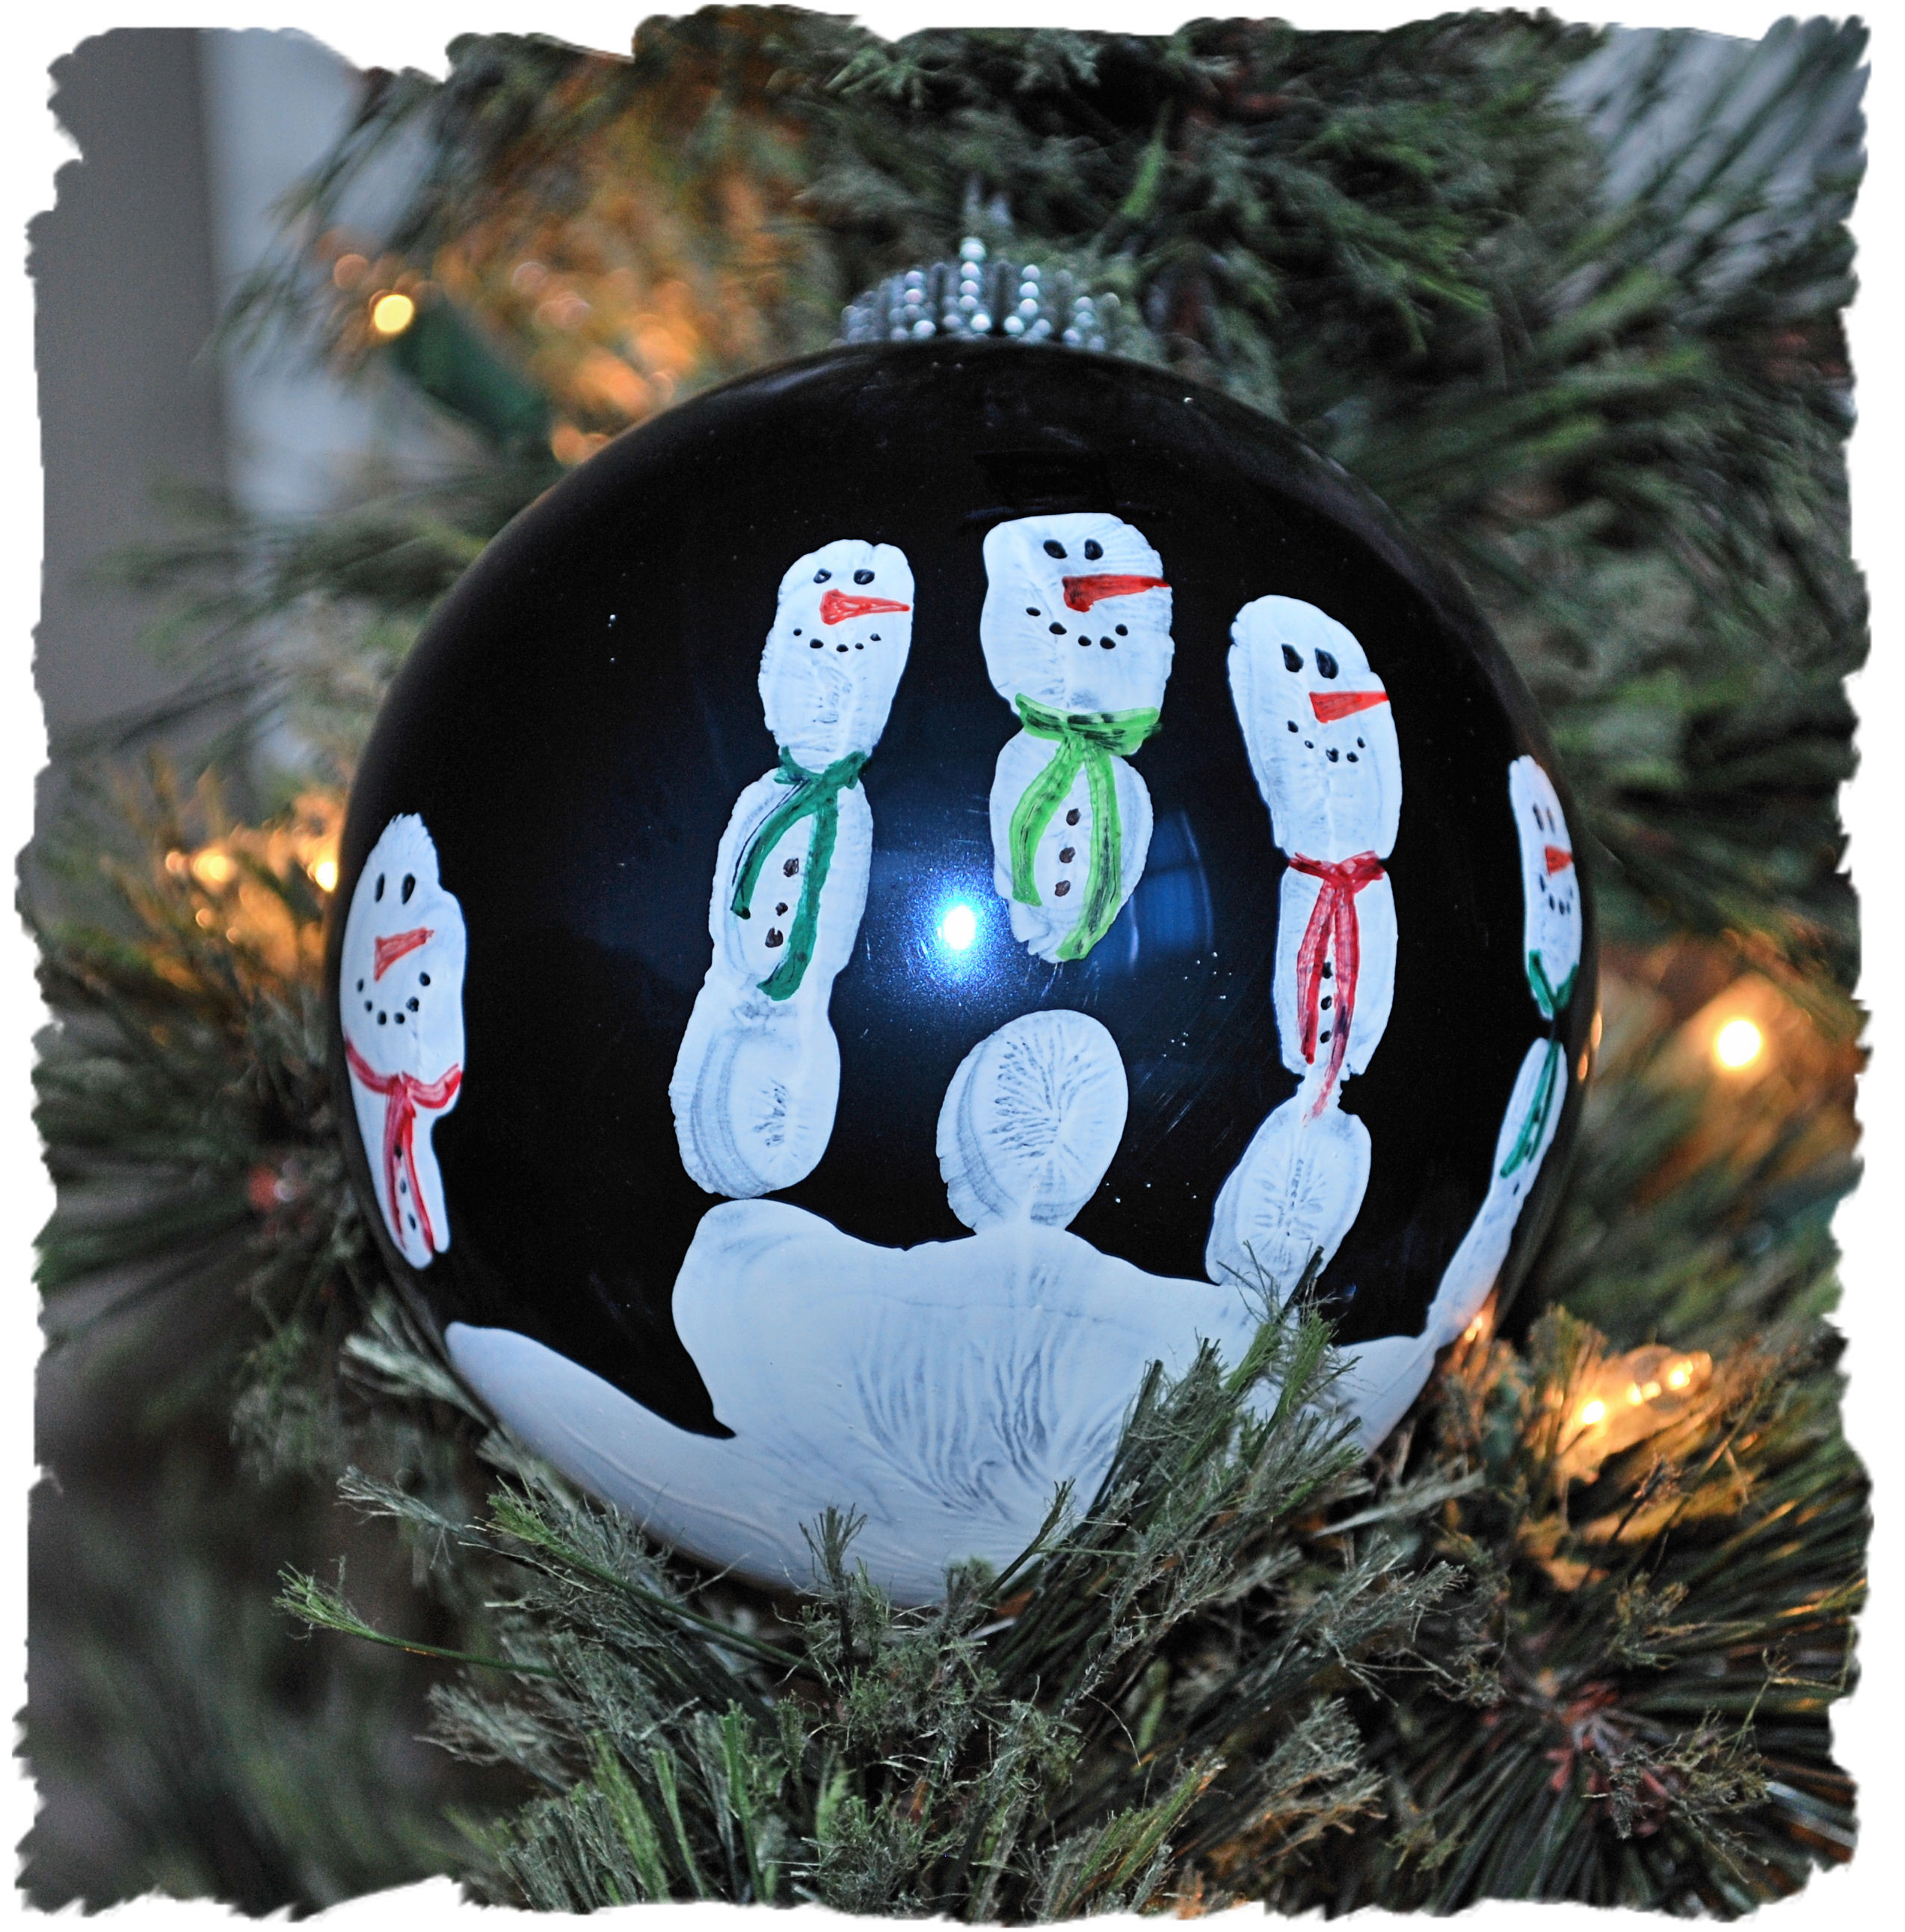 Preschool Christmas Ornament Craft Ideas
 15 Fun and Easy Christmas Craft Ideas for Kids – Miss Lassy